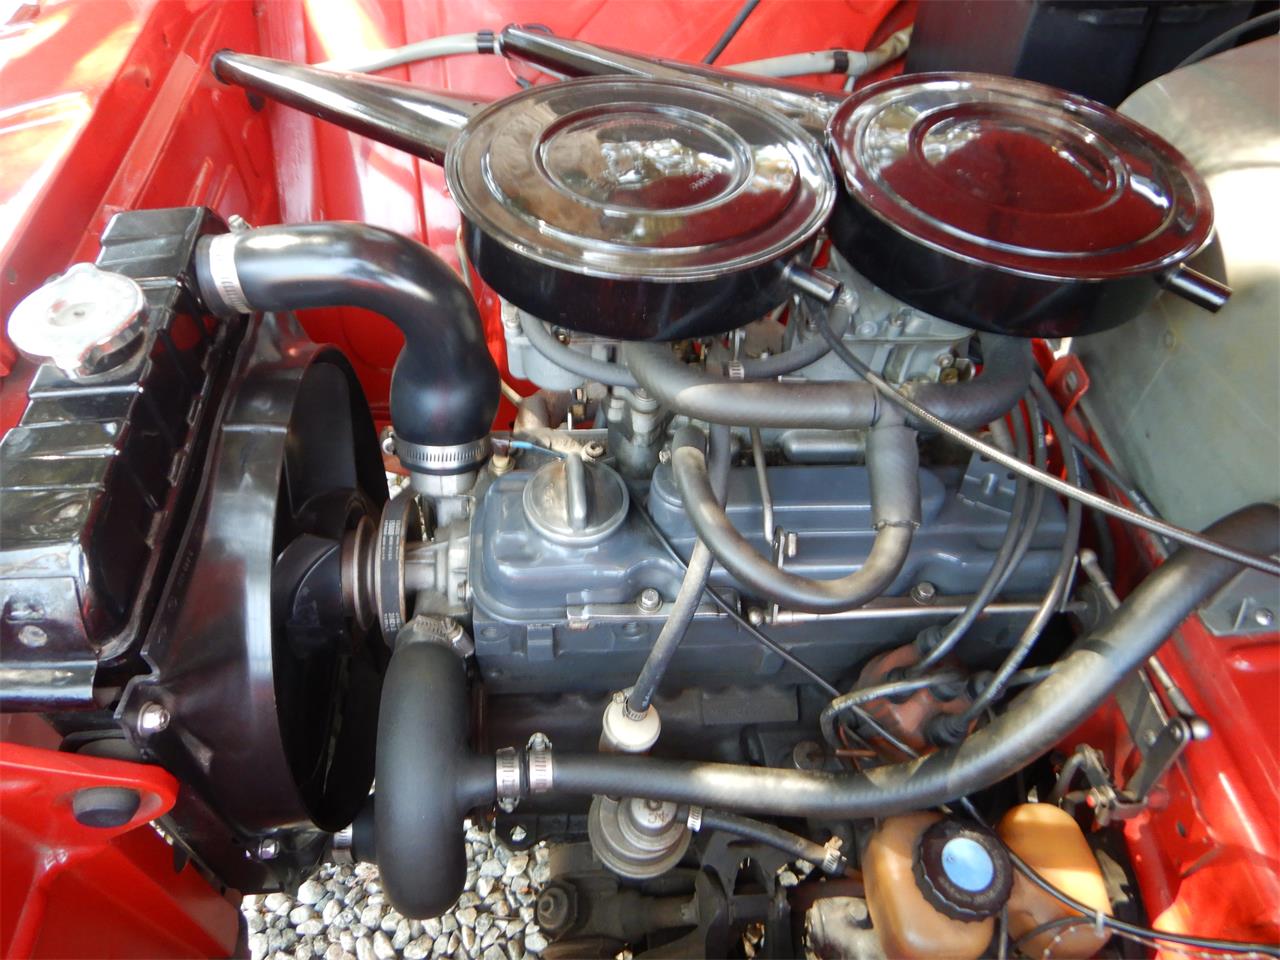 1.1-liter OHC four with twin Solex 35 PDSI carburetors